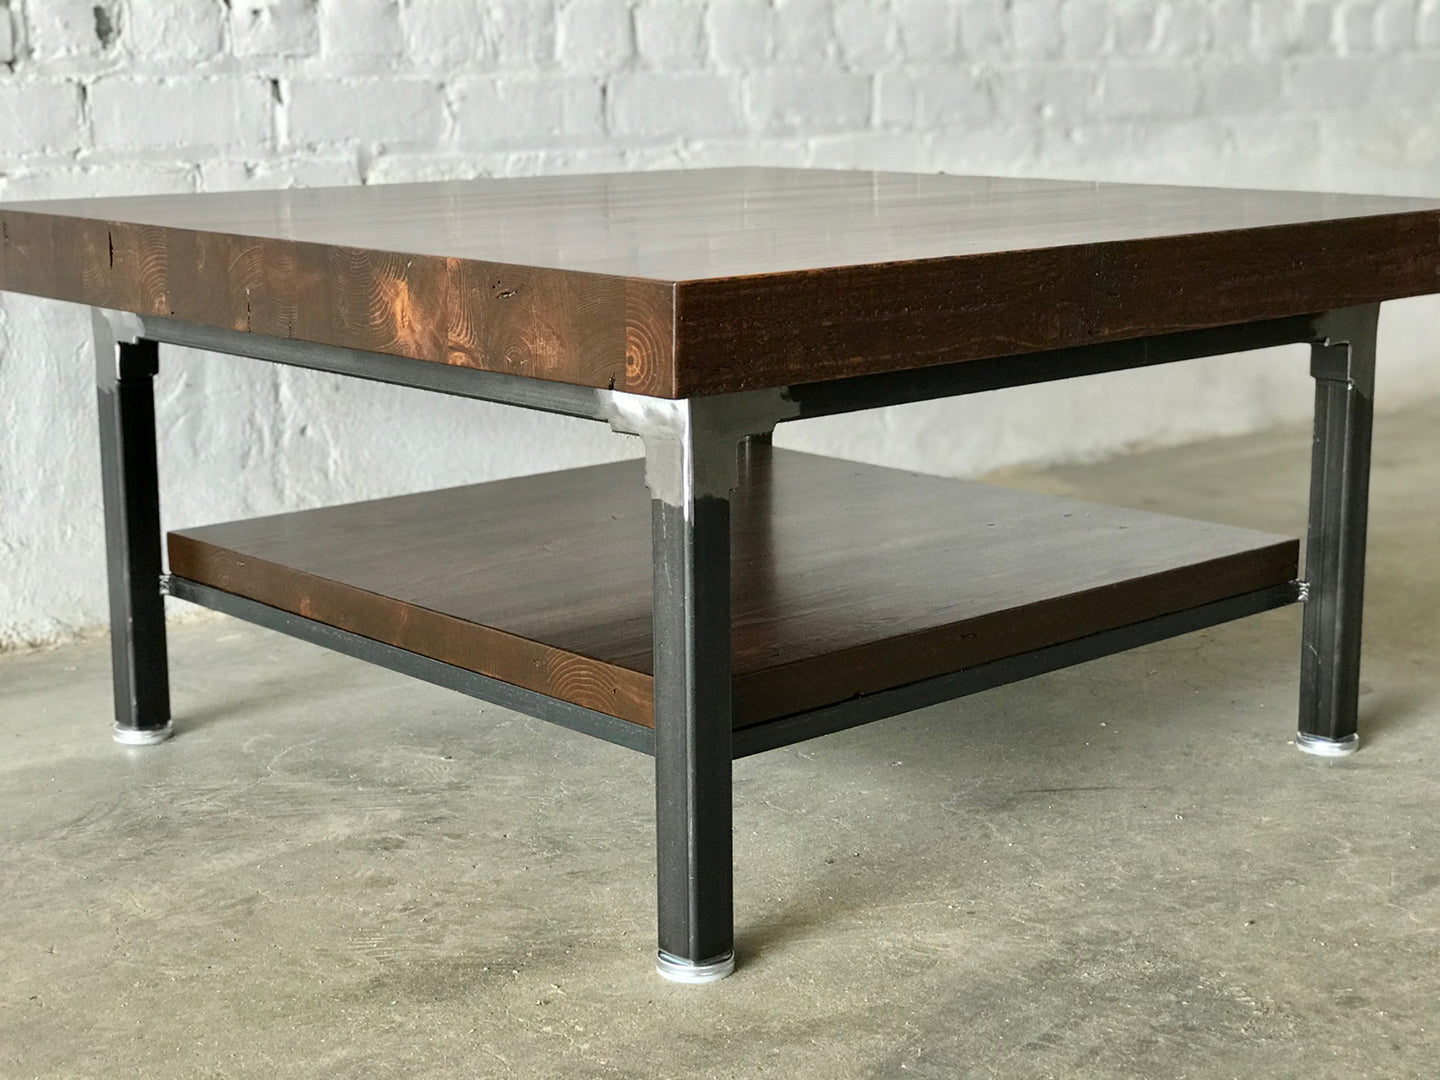 Grand Boulevard Modern Farmhouse Coffee Table With Shelf - Walnut Stain Finish